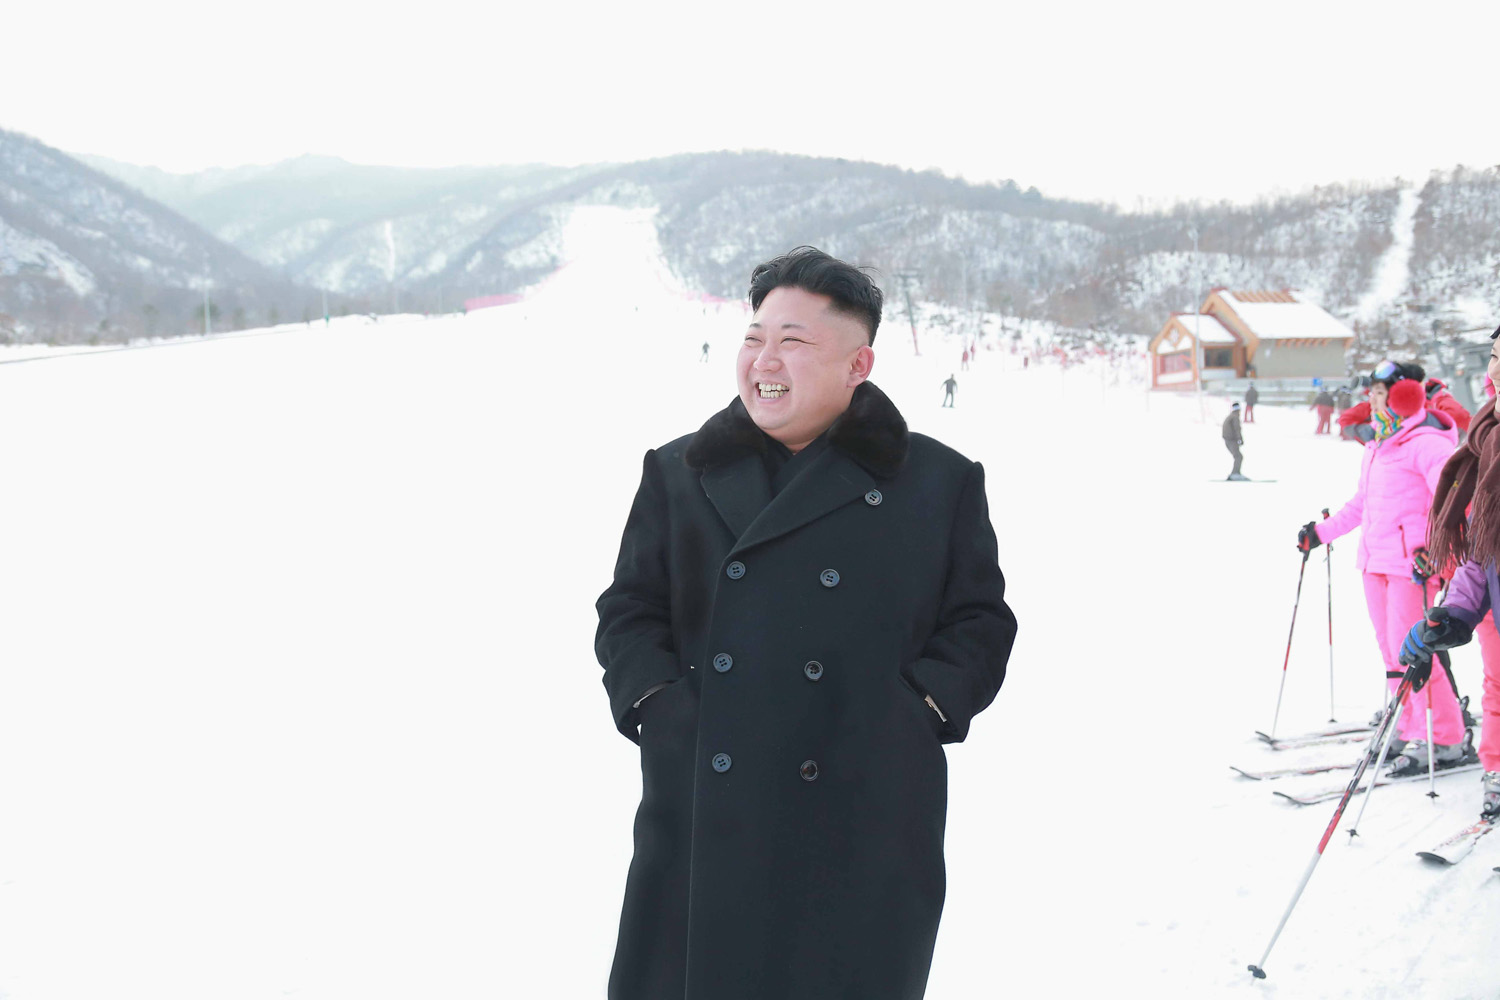 North Korean leader Kim Jong Un visits the newly built ski resort in the Masik Pass region